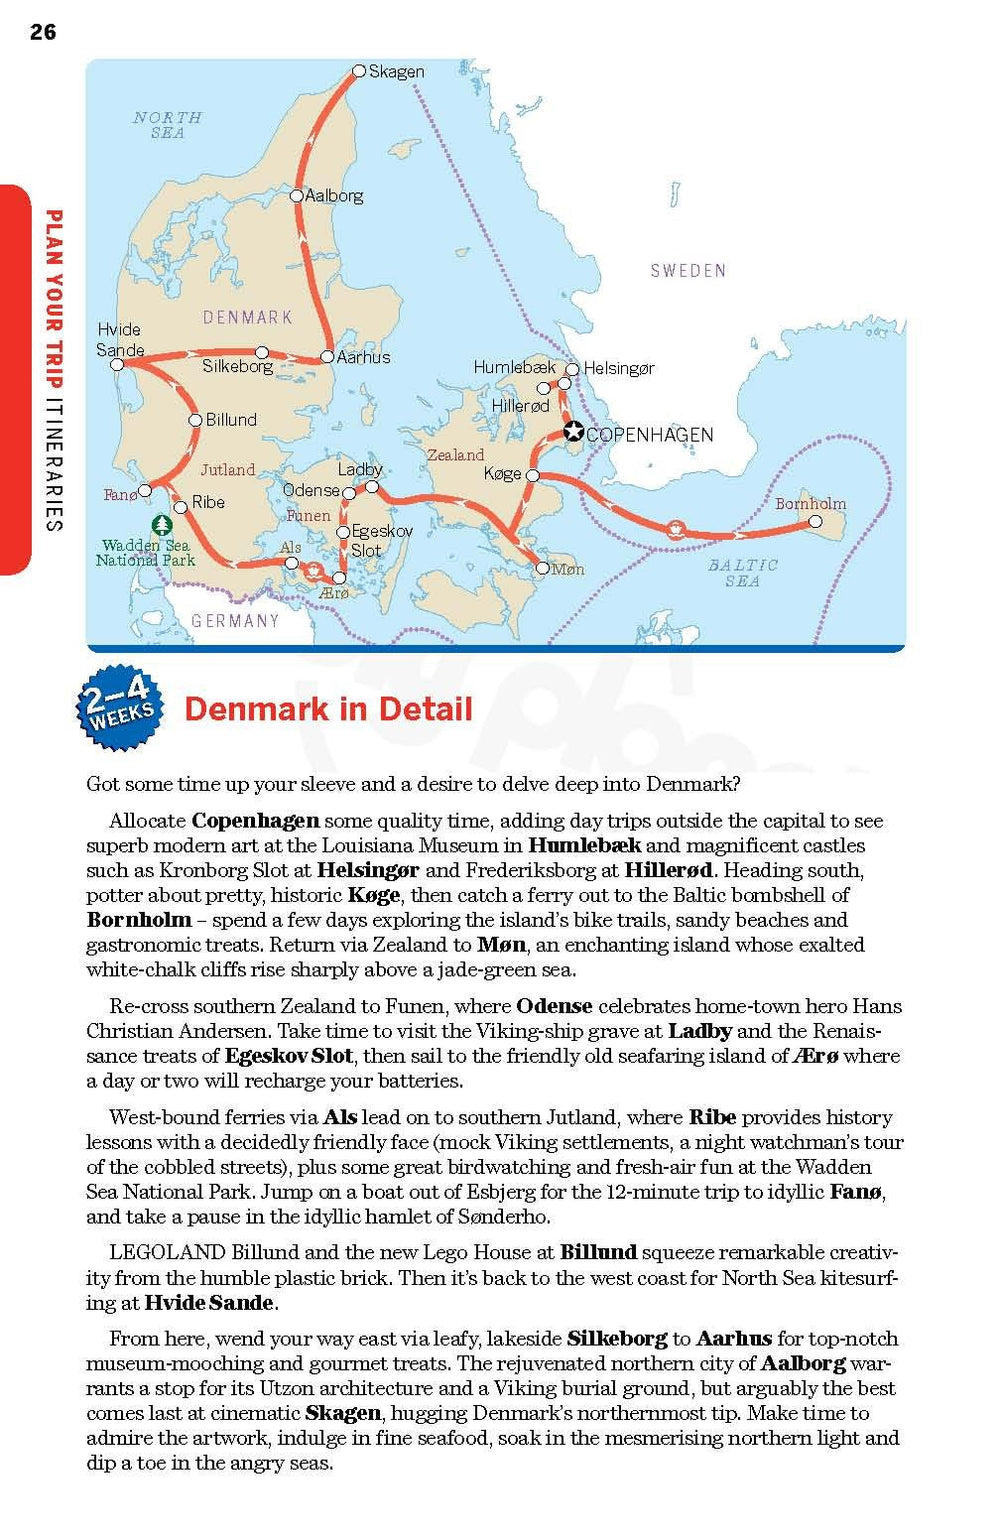 Guide de voyage (en anglais) - Denmark | Lonely Planet guide de voyage Lonely Planet 